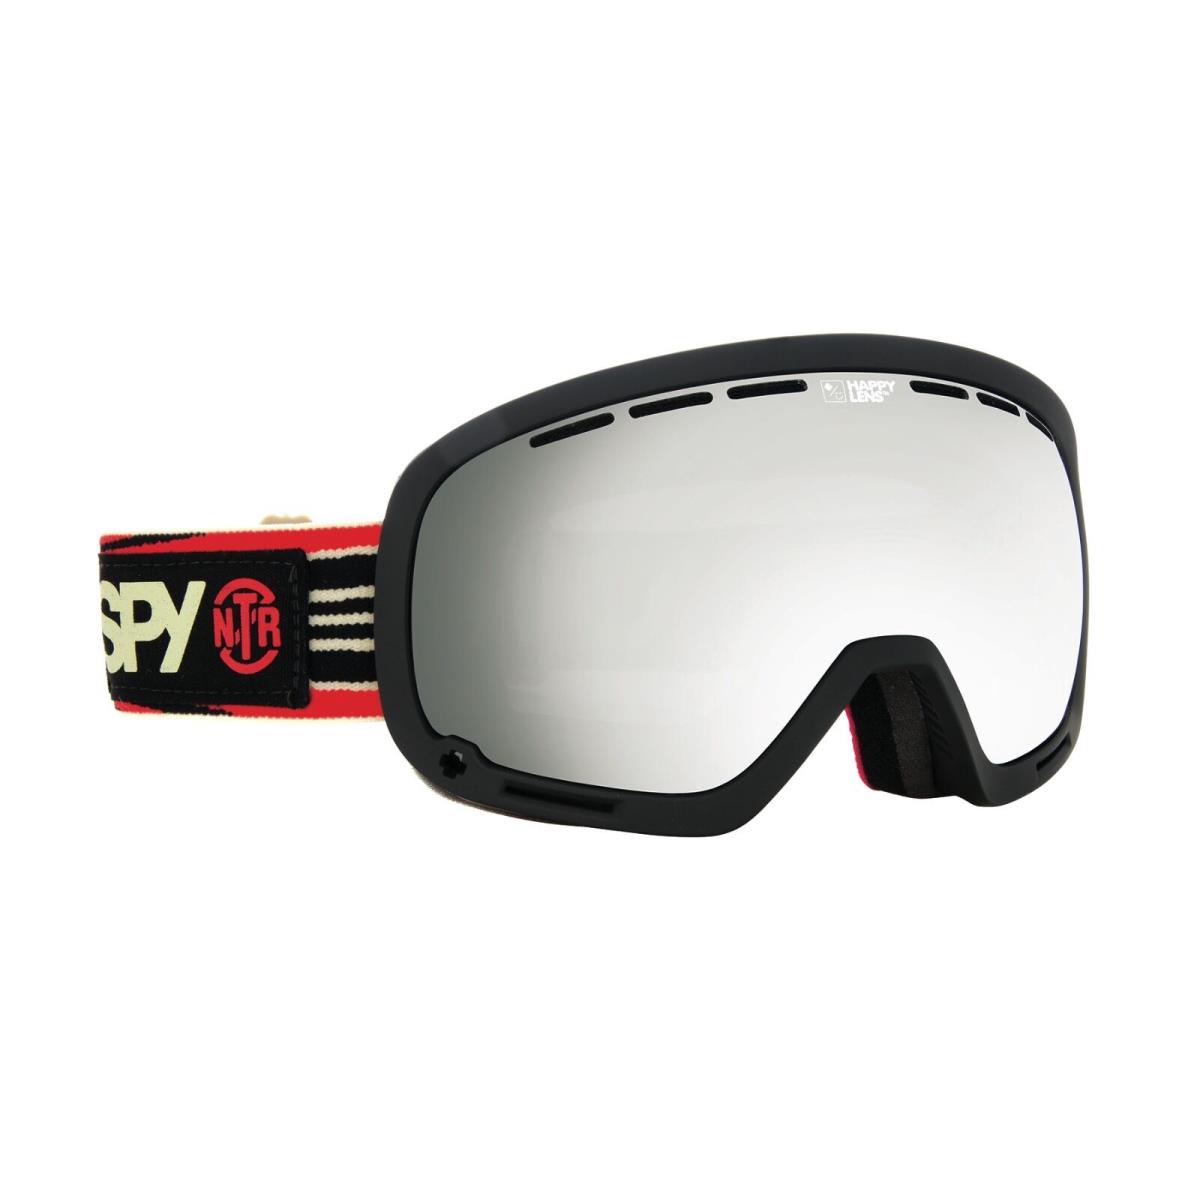 Spy Optic Marshall Spy + Ntr Snowboard Ski Goggle Happy Lens Pack